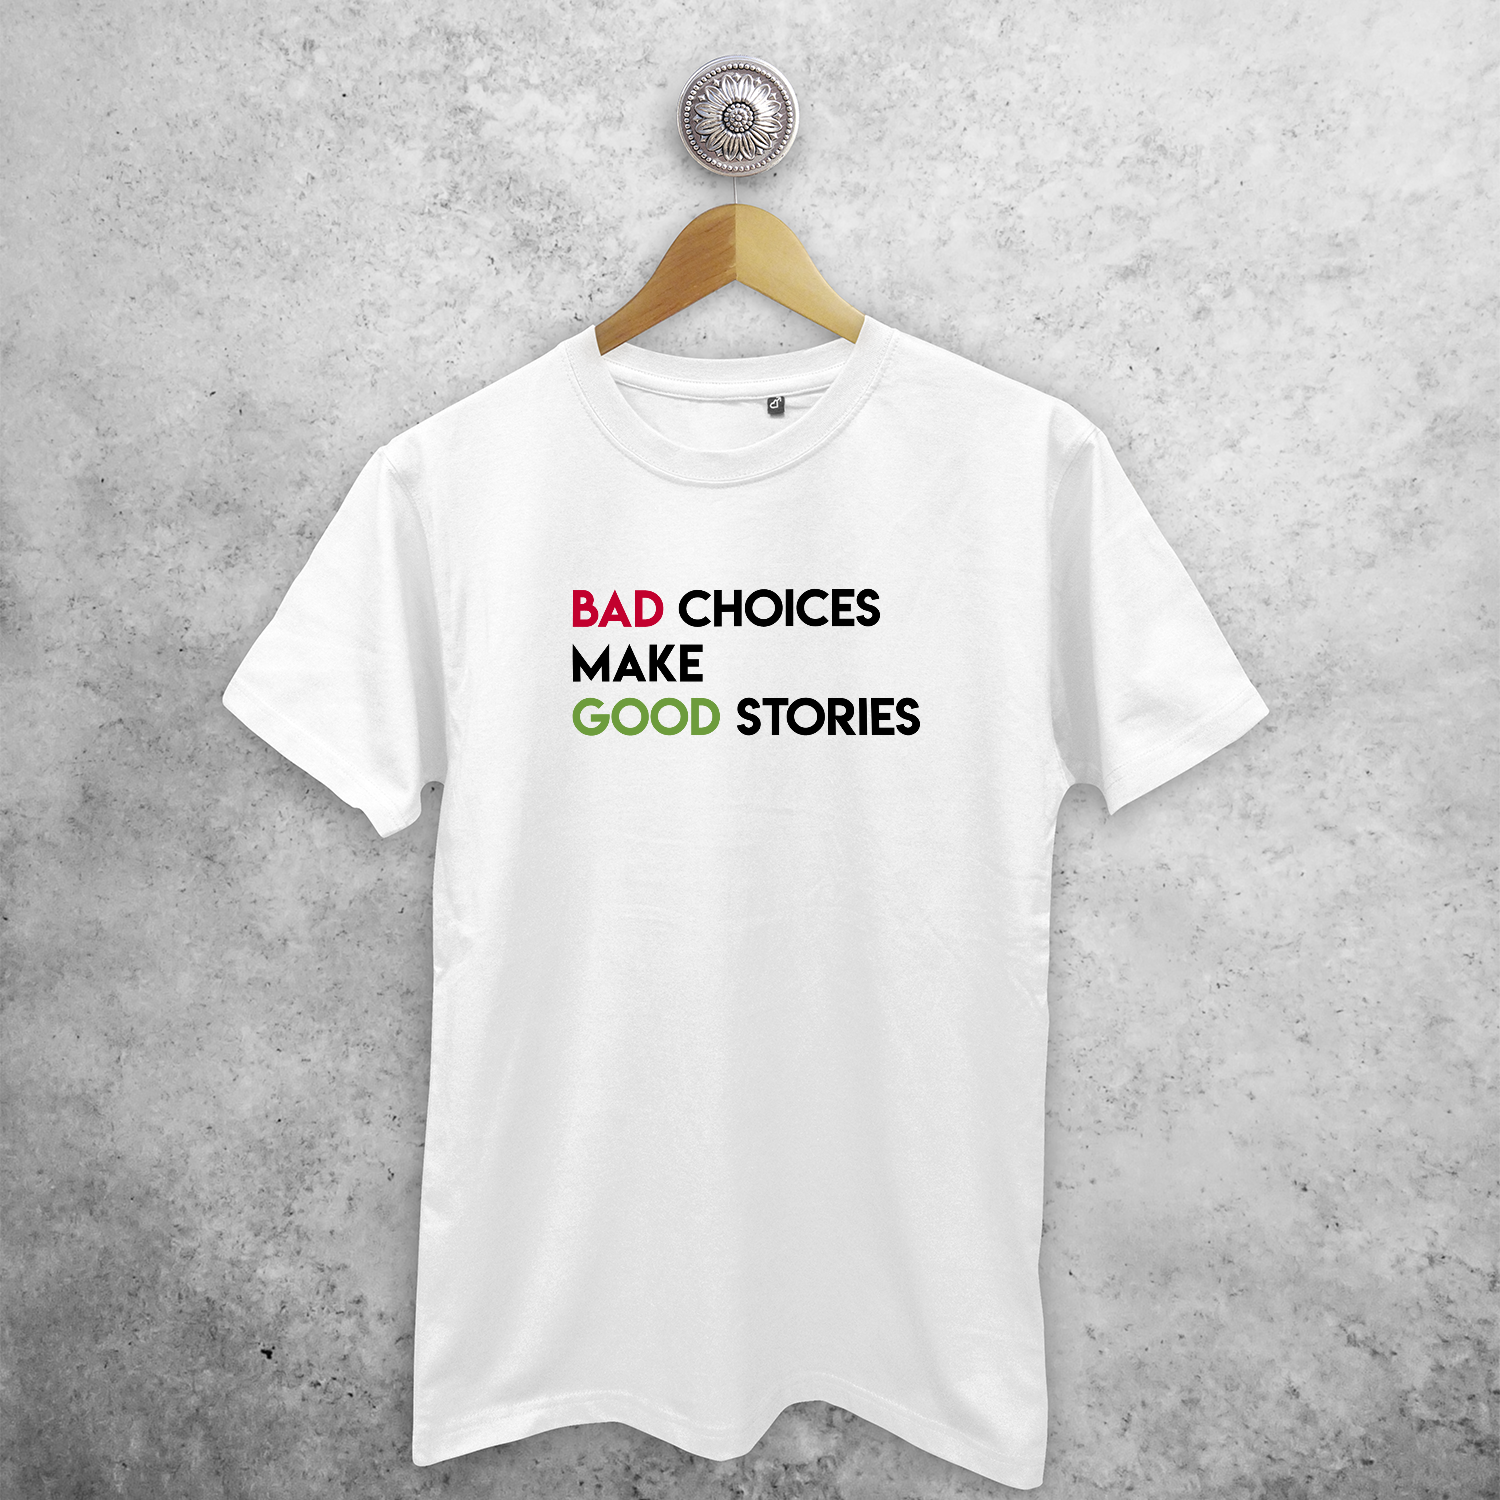 'Bad choices make good stories' adult shirt